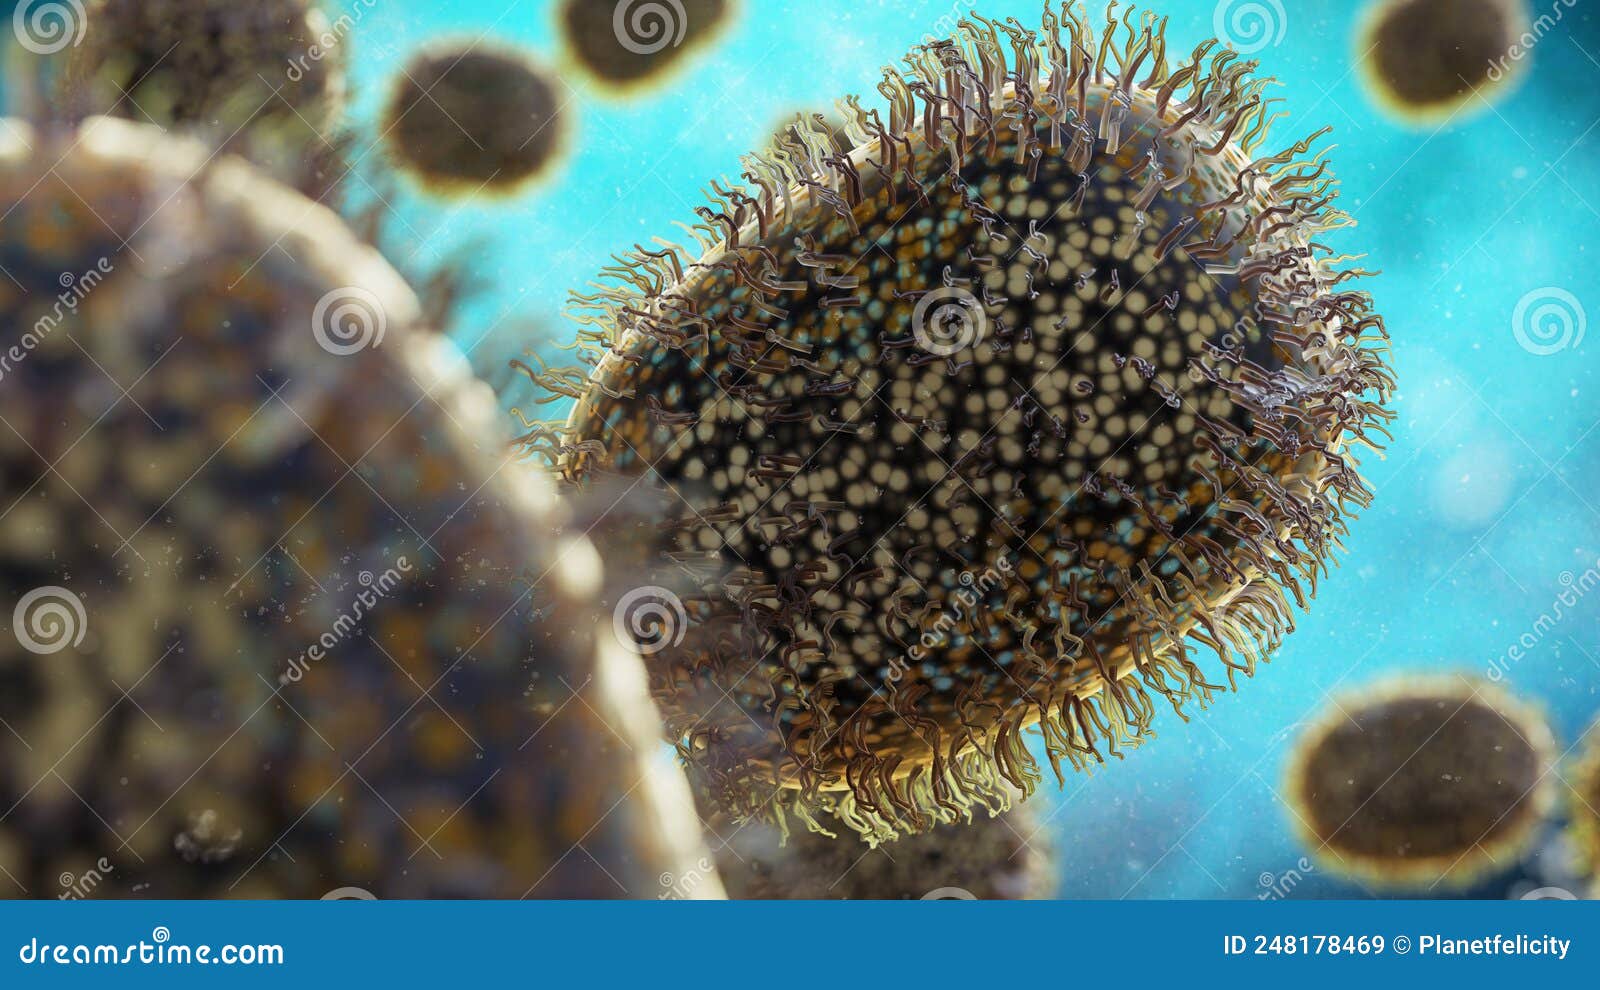 monkeypox virus, contagious microscopic pathogen closeup, infectious zoonotic disease 3d science rendering